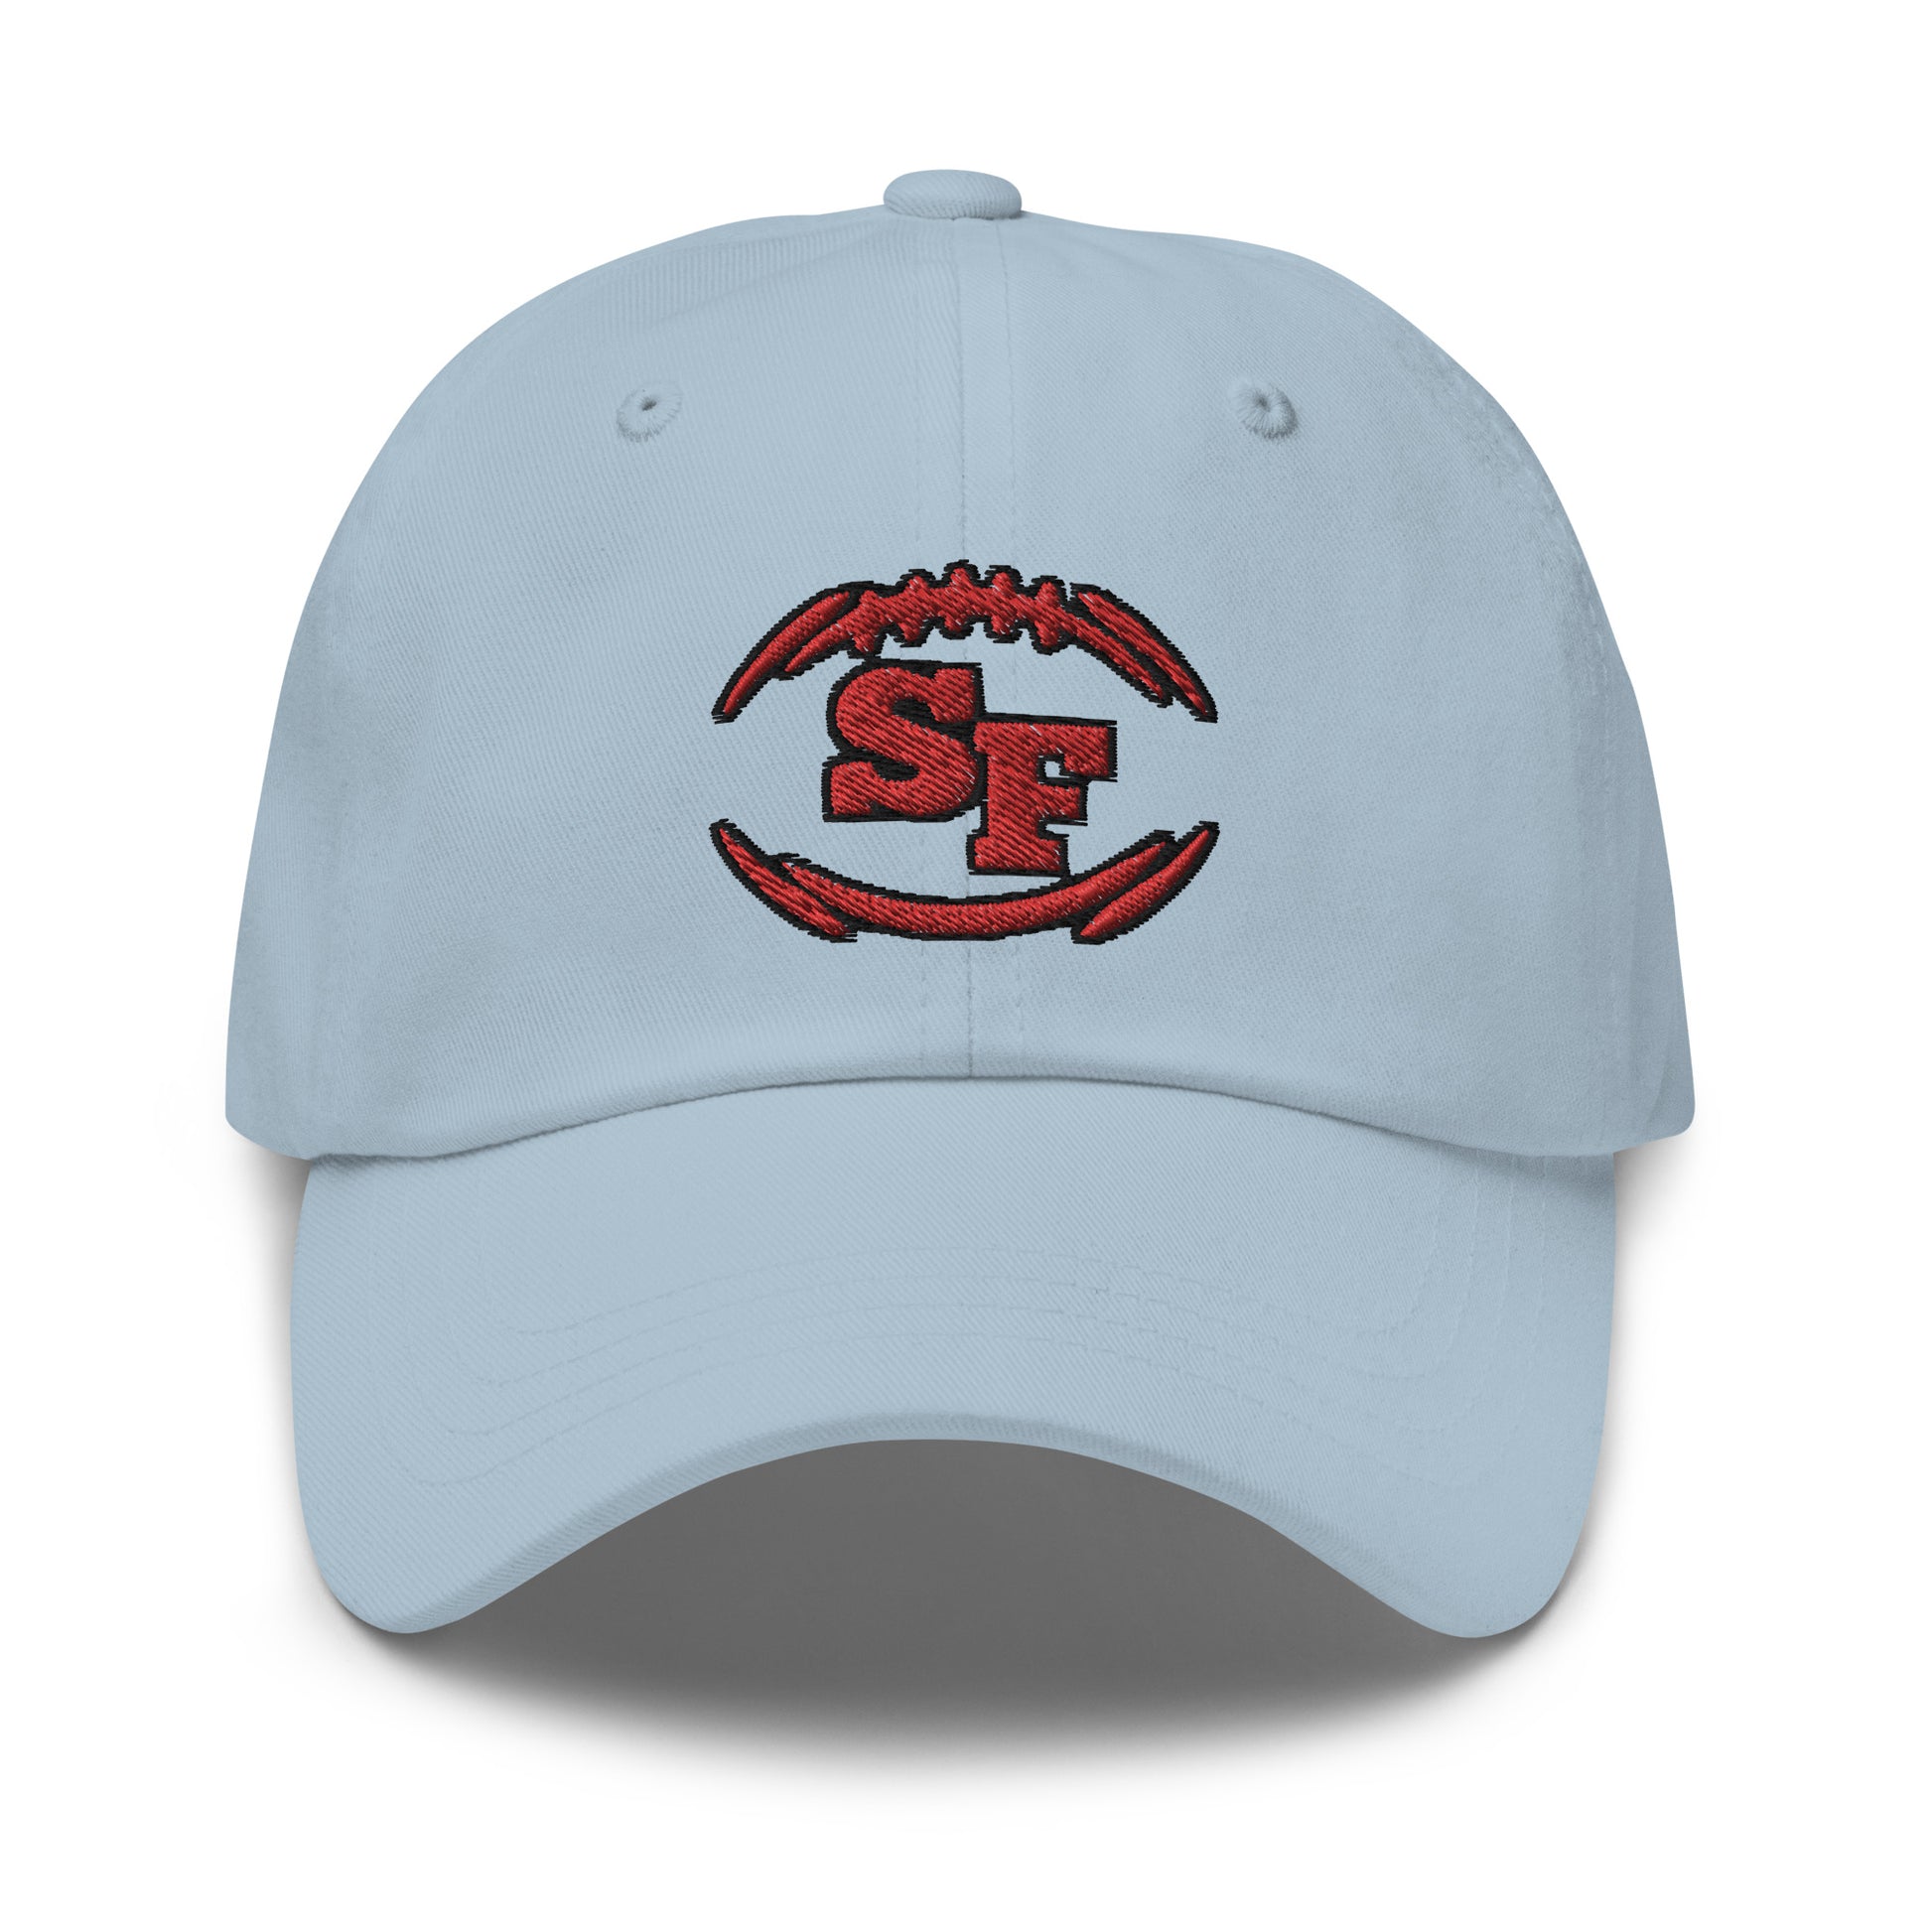 49ers Camo Hat / San Francisco 49ers Hat / Kyle Shanahan Dad hat